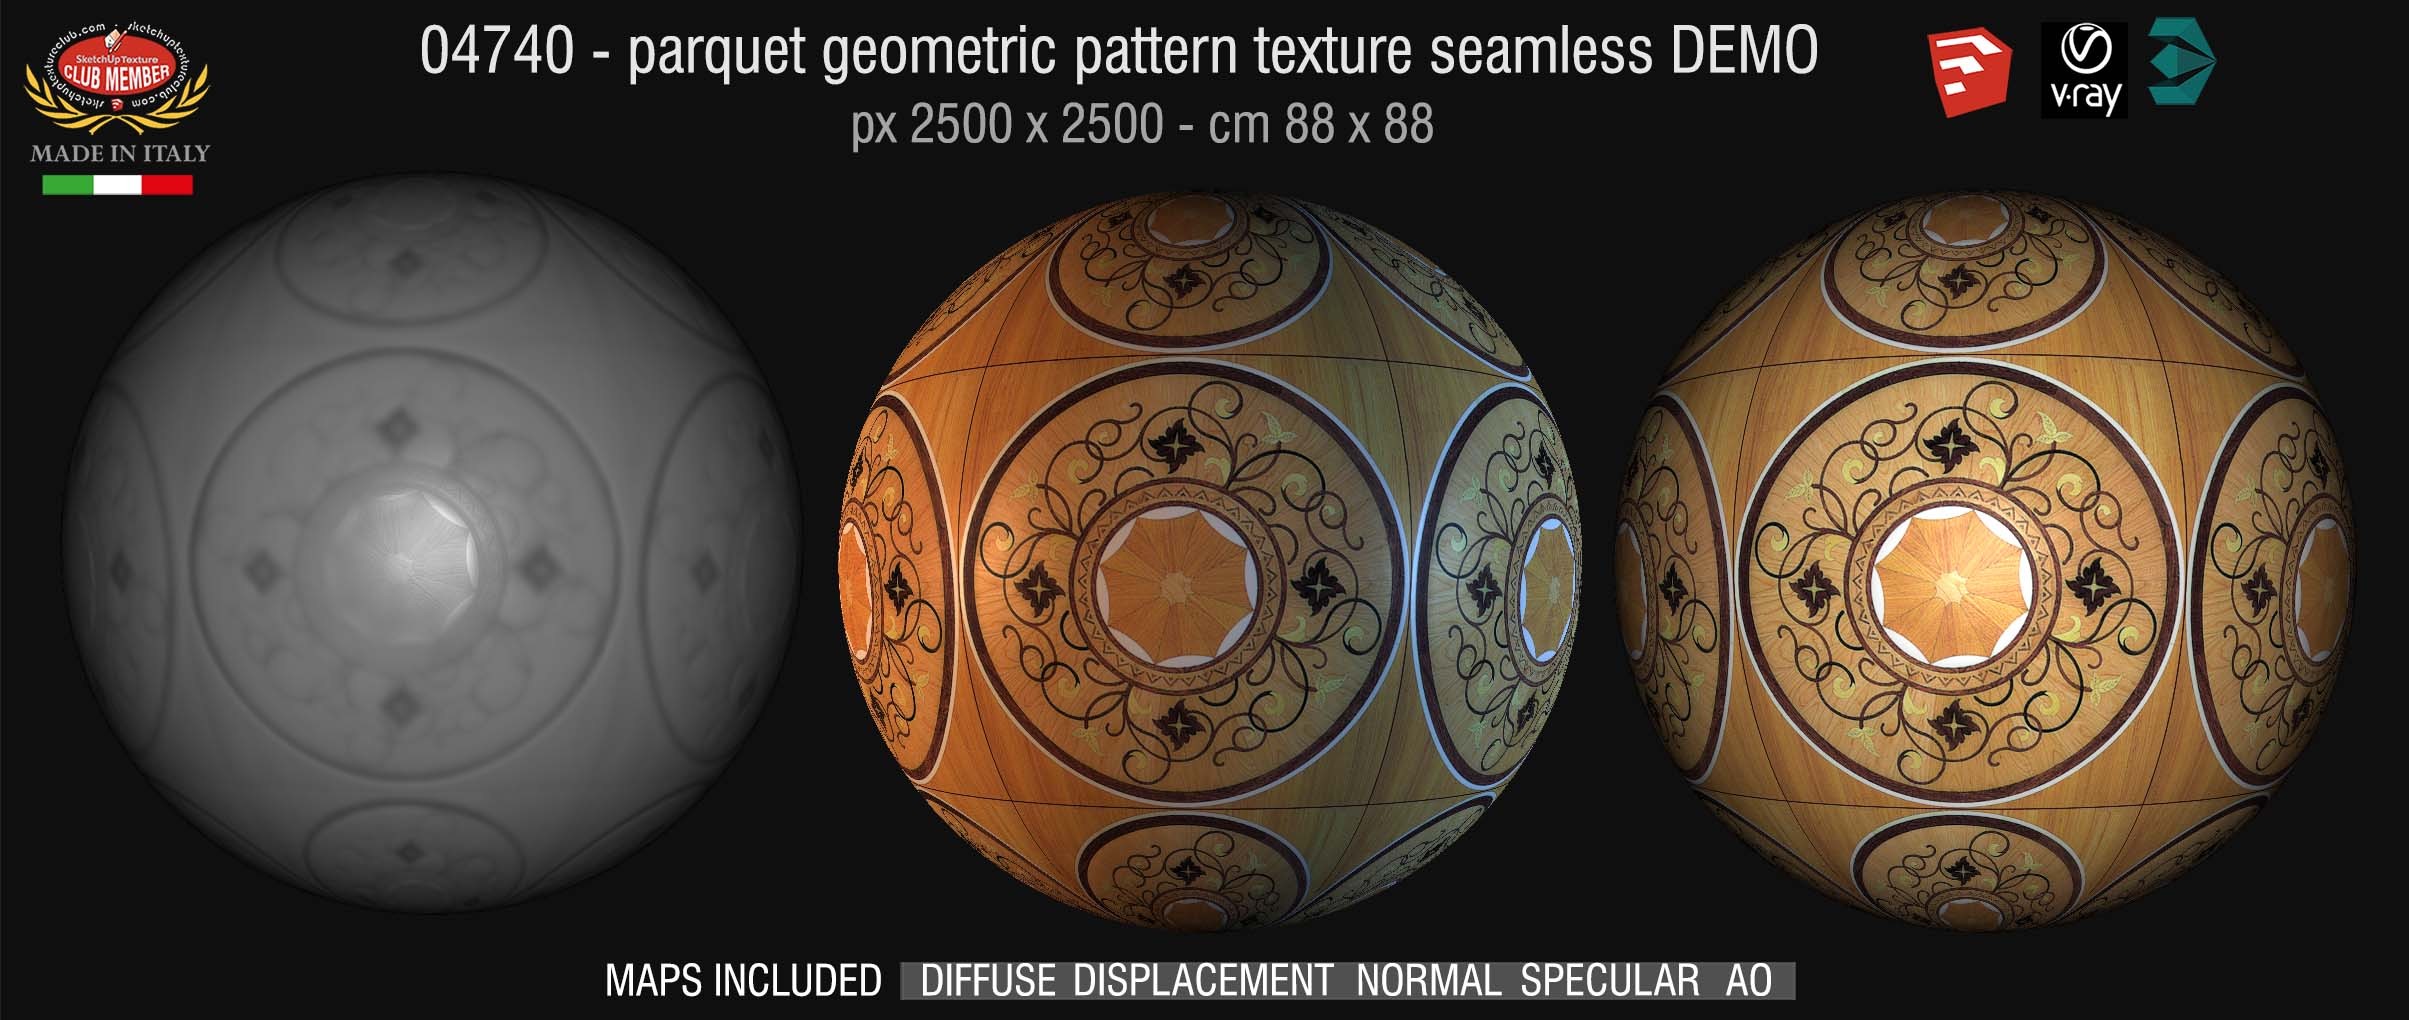 04740 HR Parquet geometric pattern texture seamless + maps DEMO